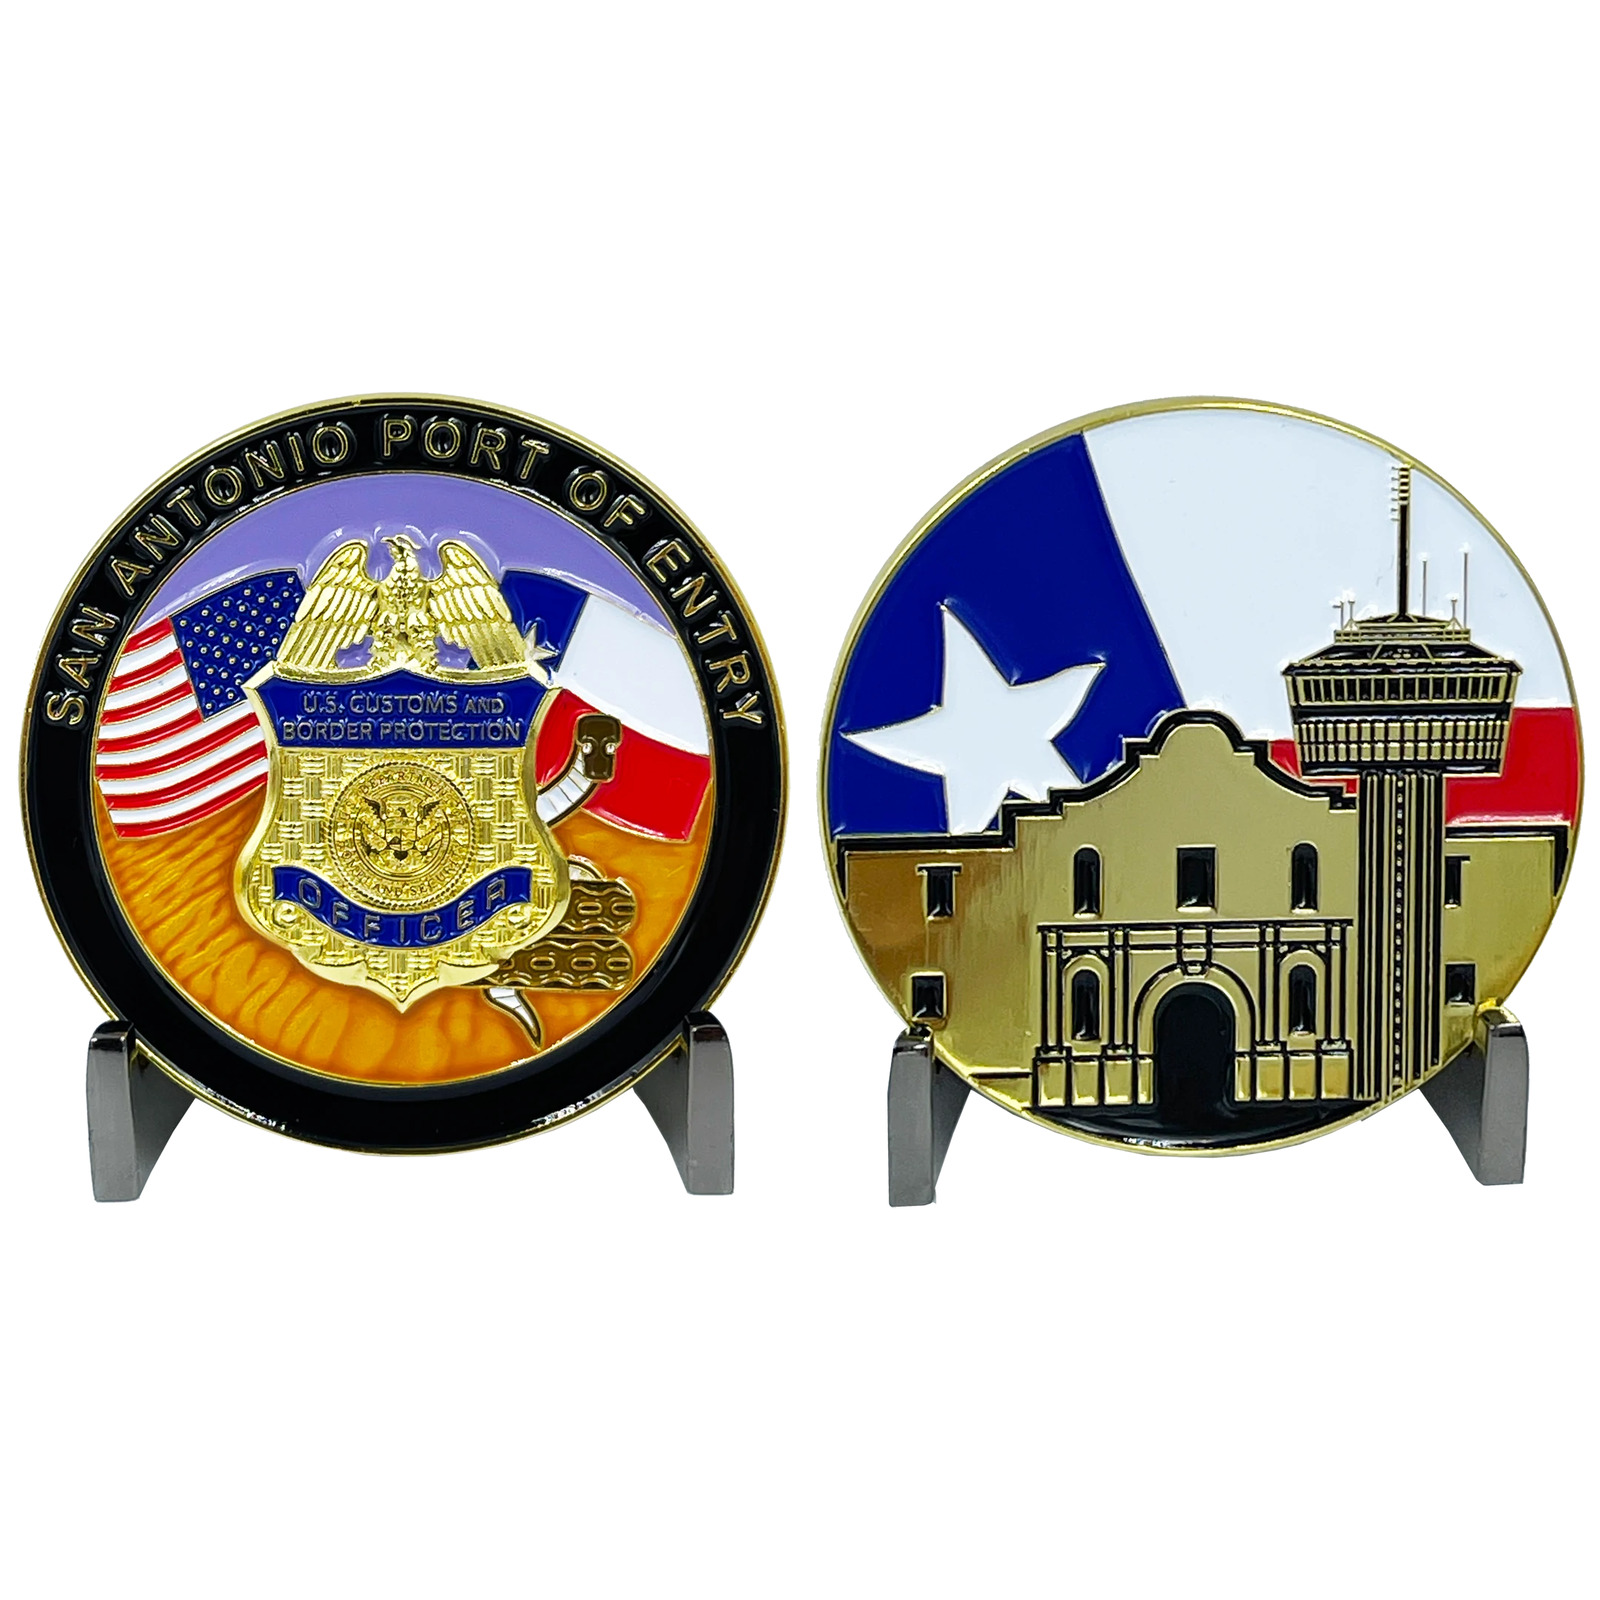 BL7-004 San Antonio Texas CBP Officer Challenge Coin Port of Entry CBPO Field Op